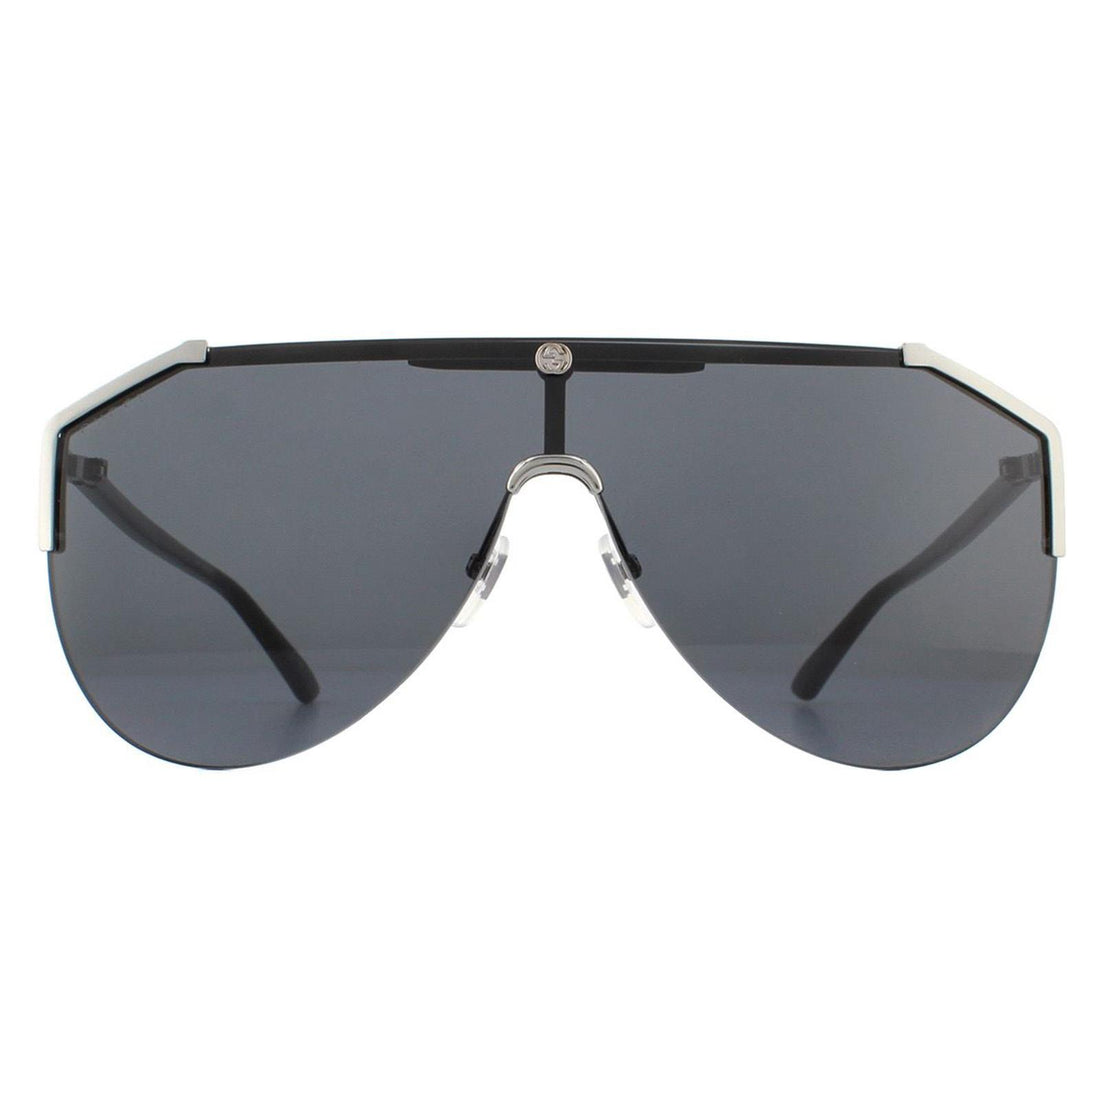 Gucci Sunglasses GG0584S 001 Ruthenium and Black Grey